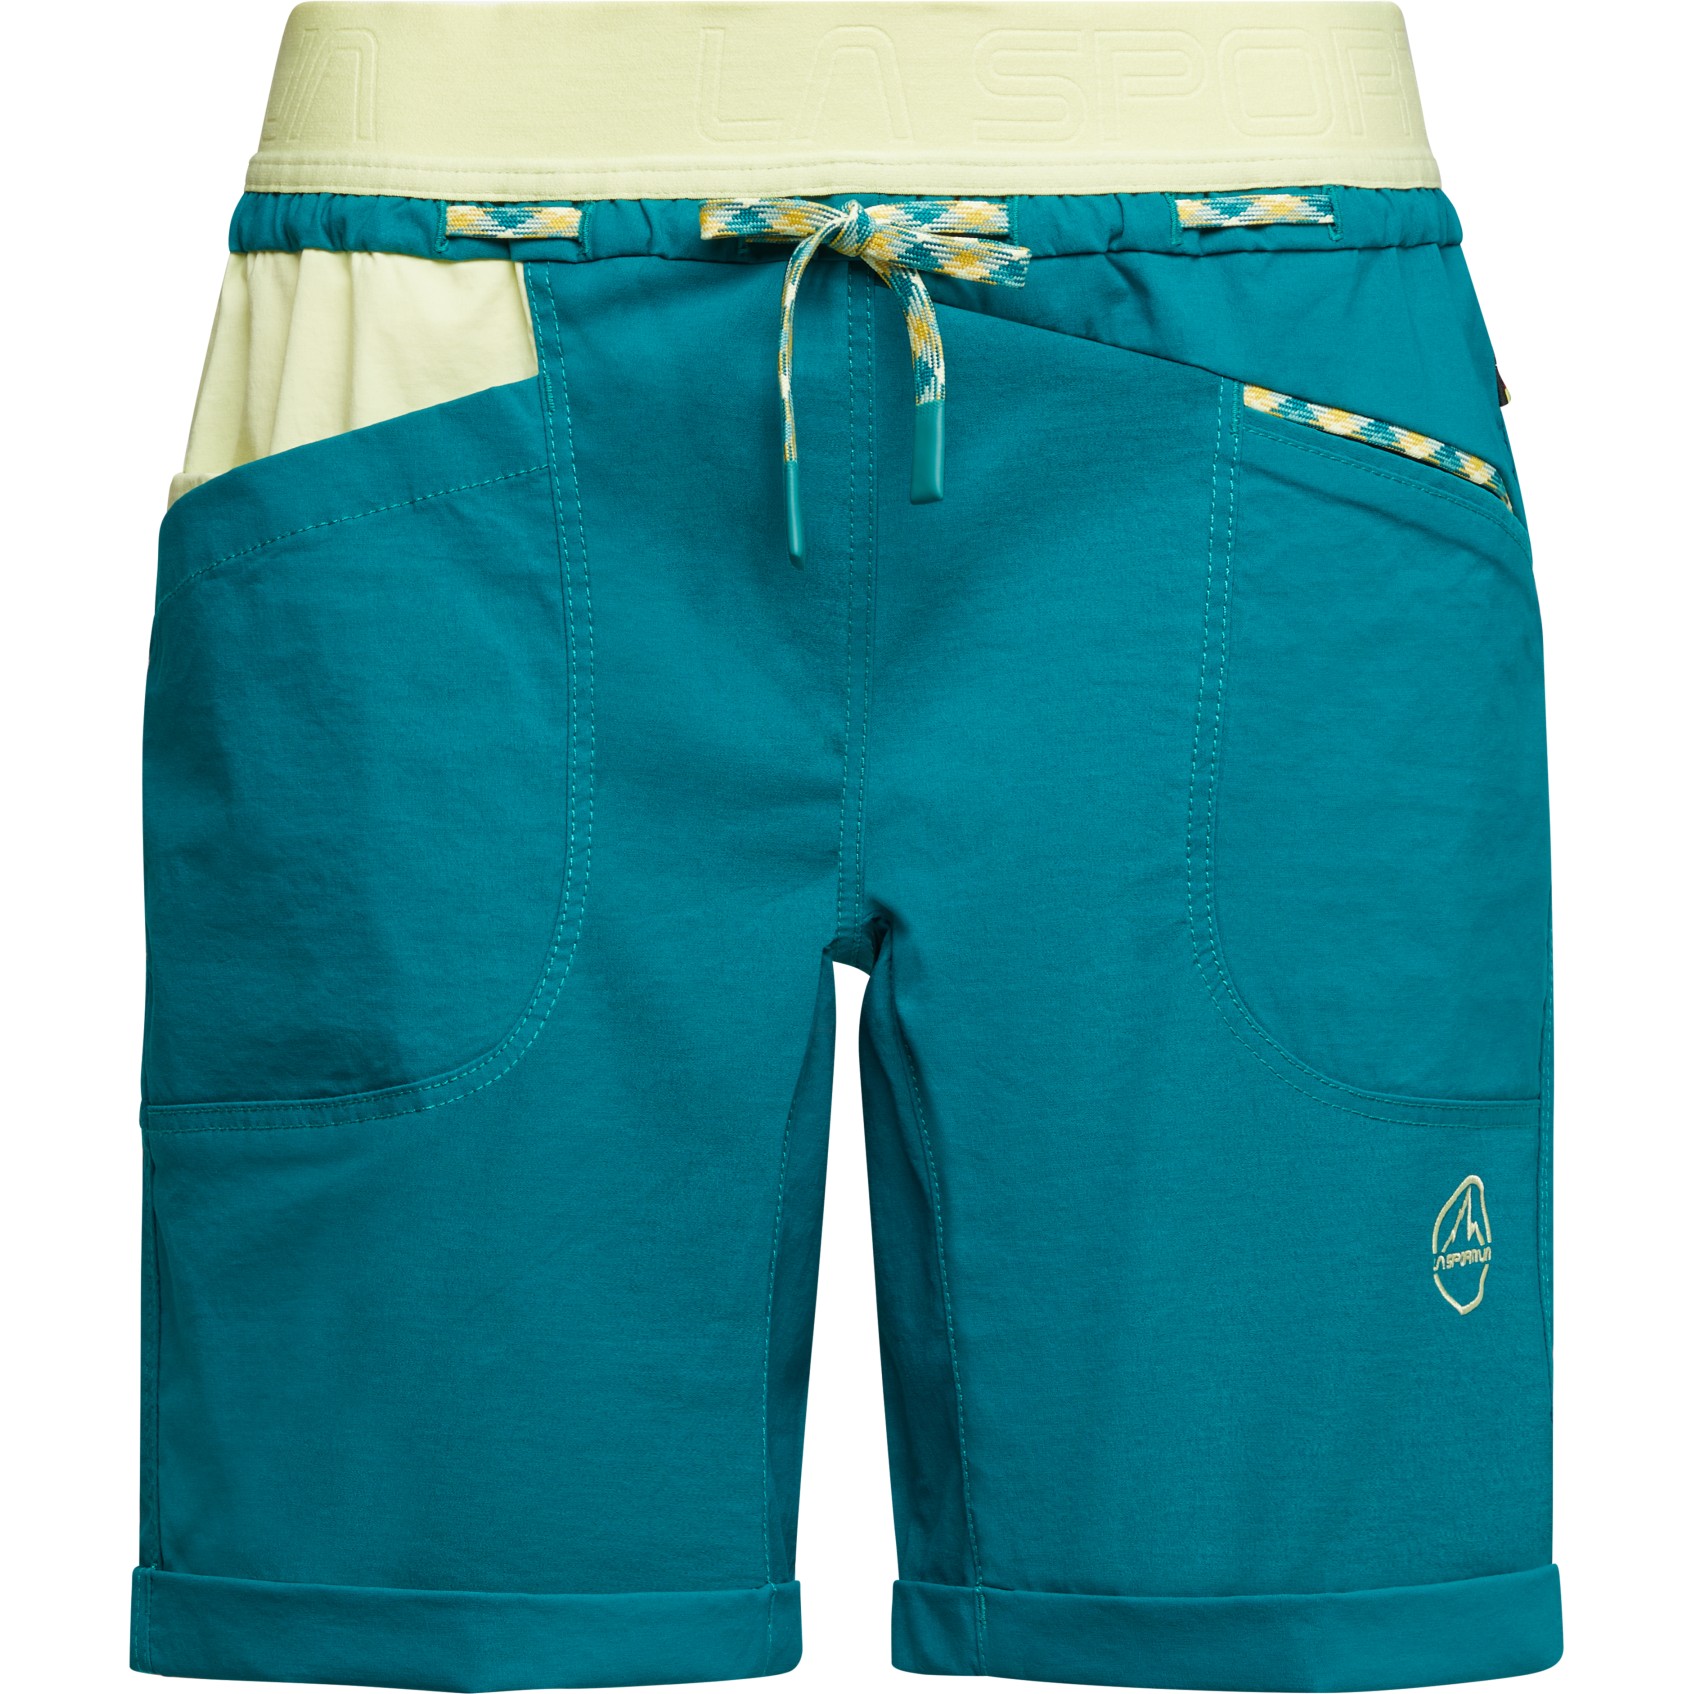 Productfoto van La Sportiva Mantra Shorts Dames - Everglade/Zest